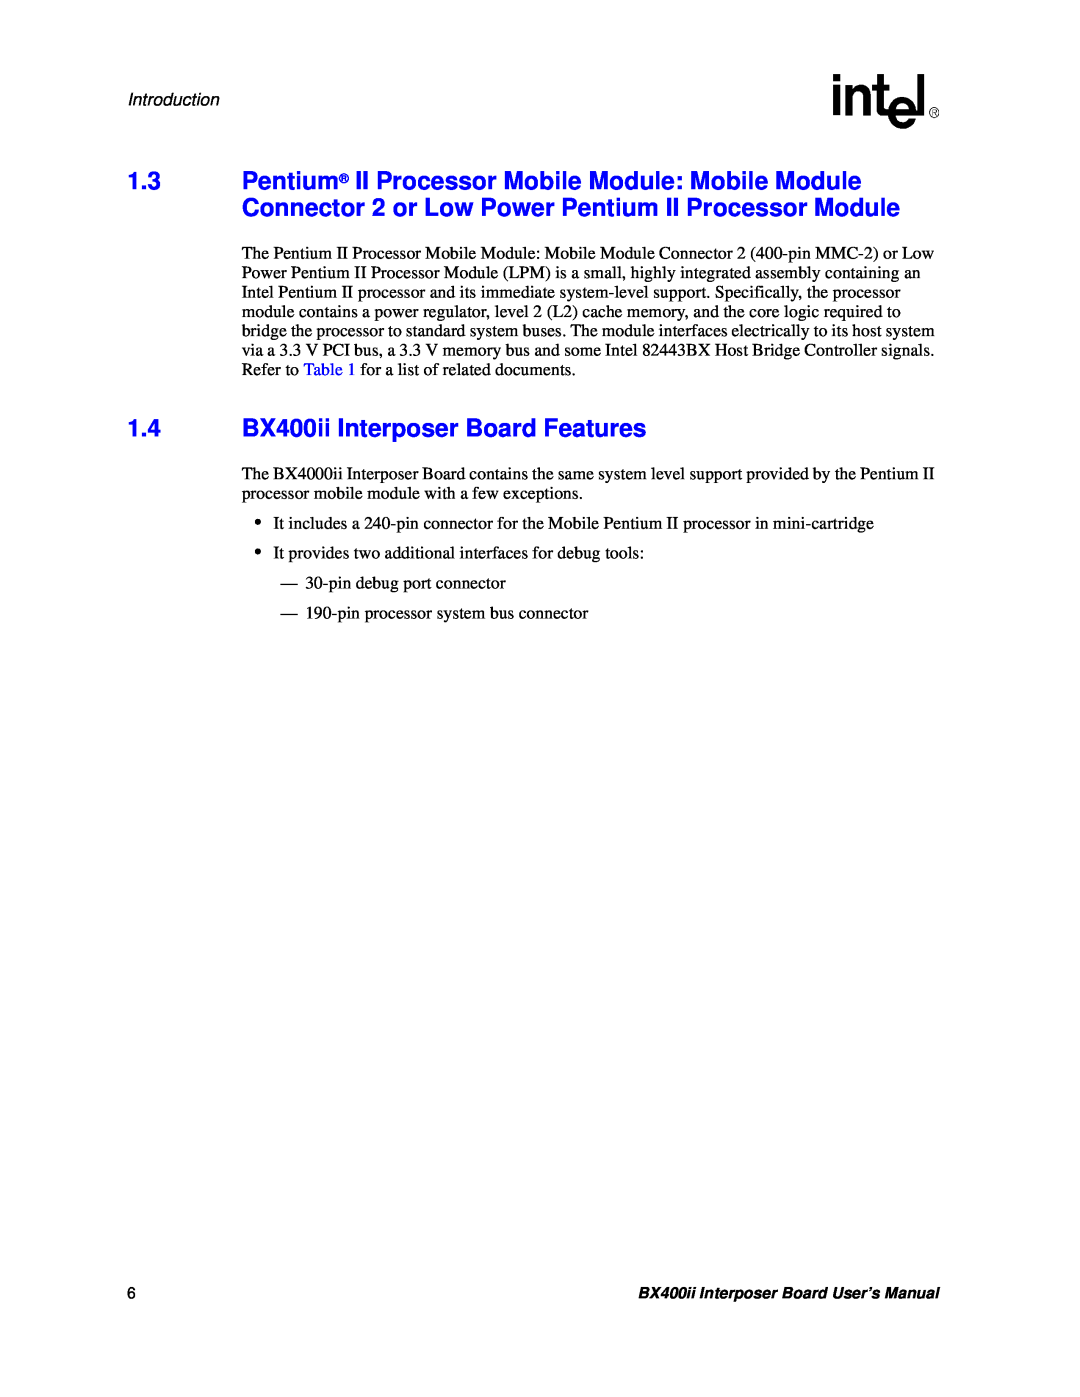 Intel BX400II user manual 1.4BX400ii Interposer Board Features, Introduction 